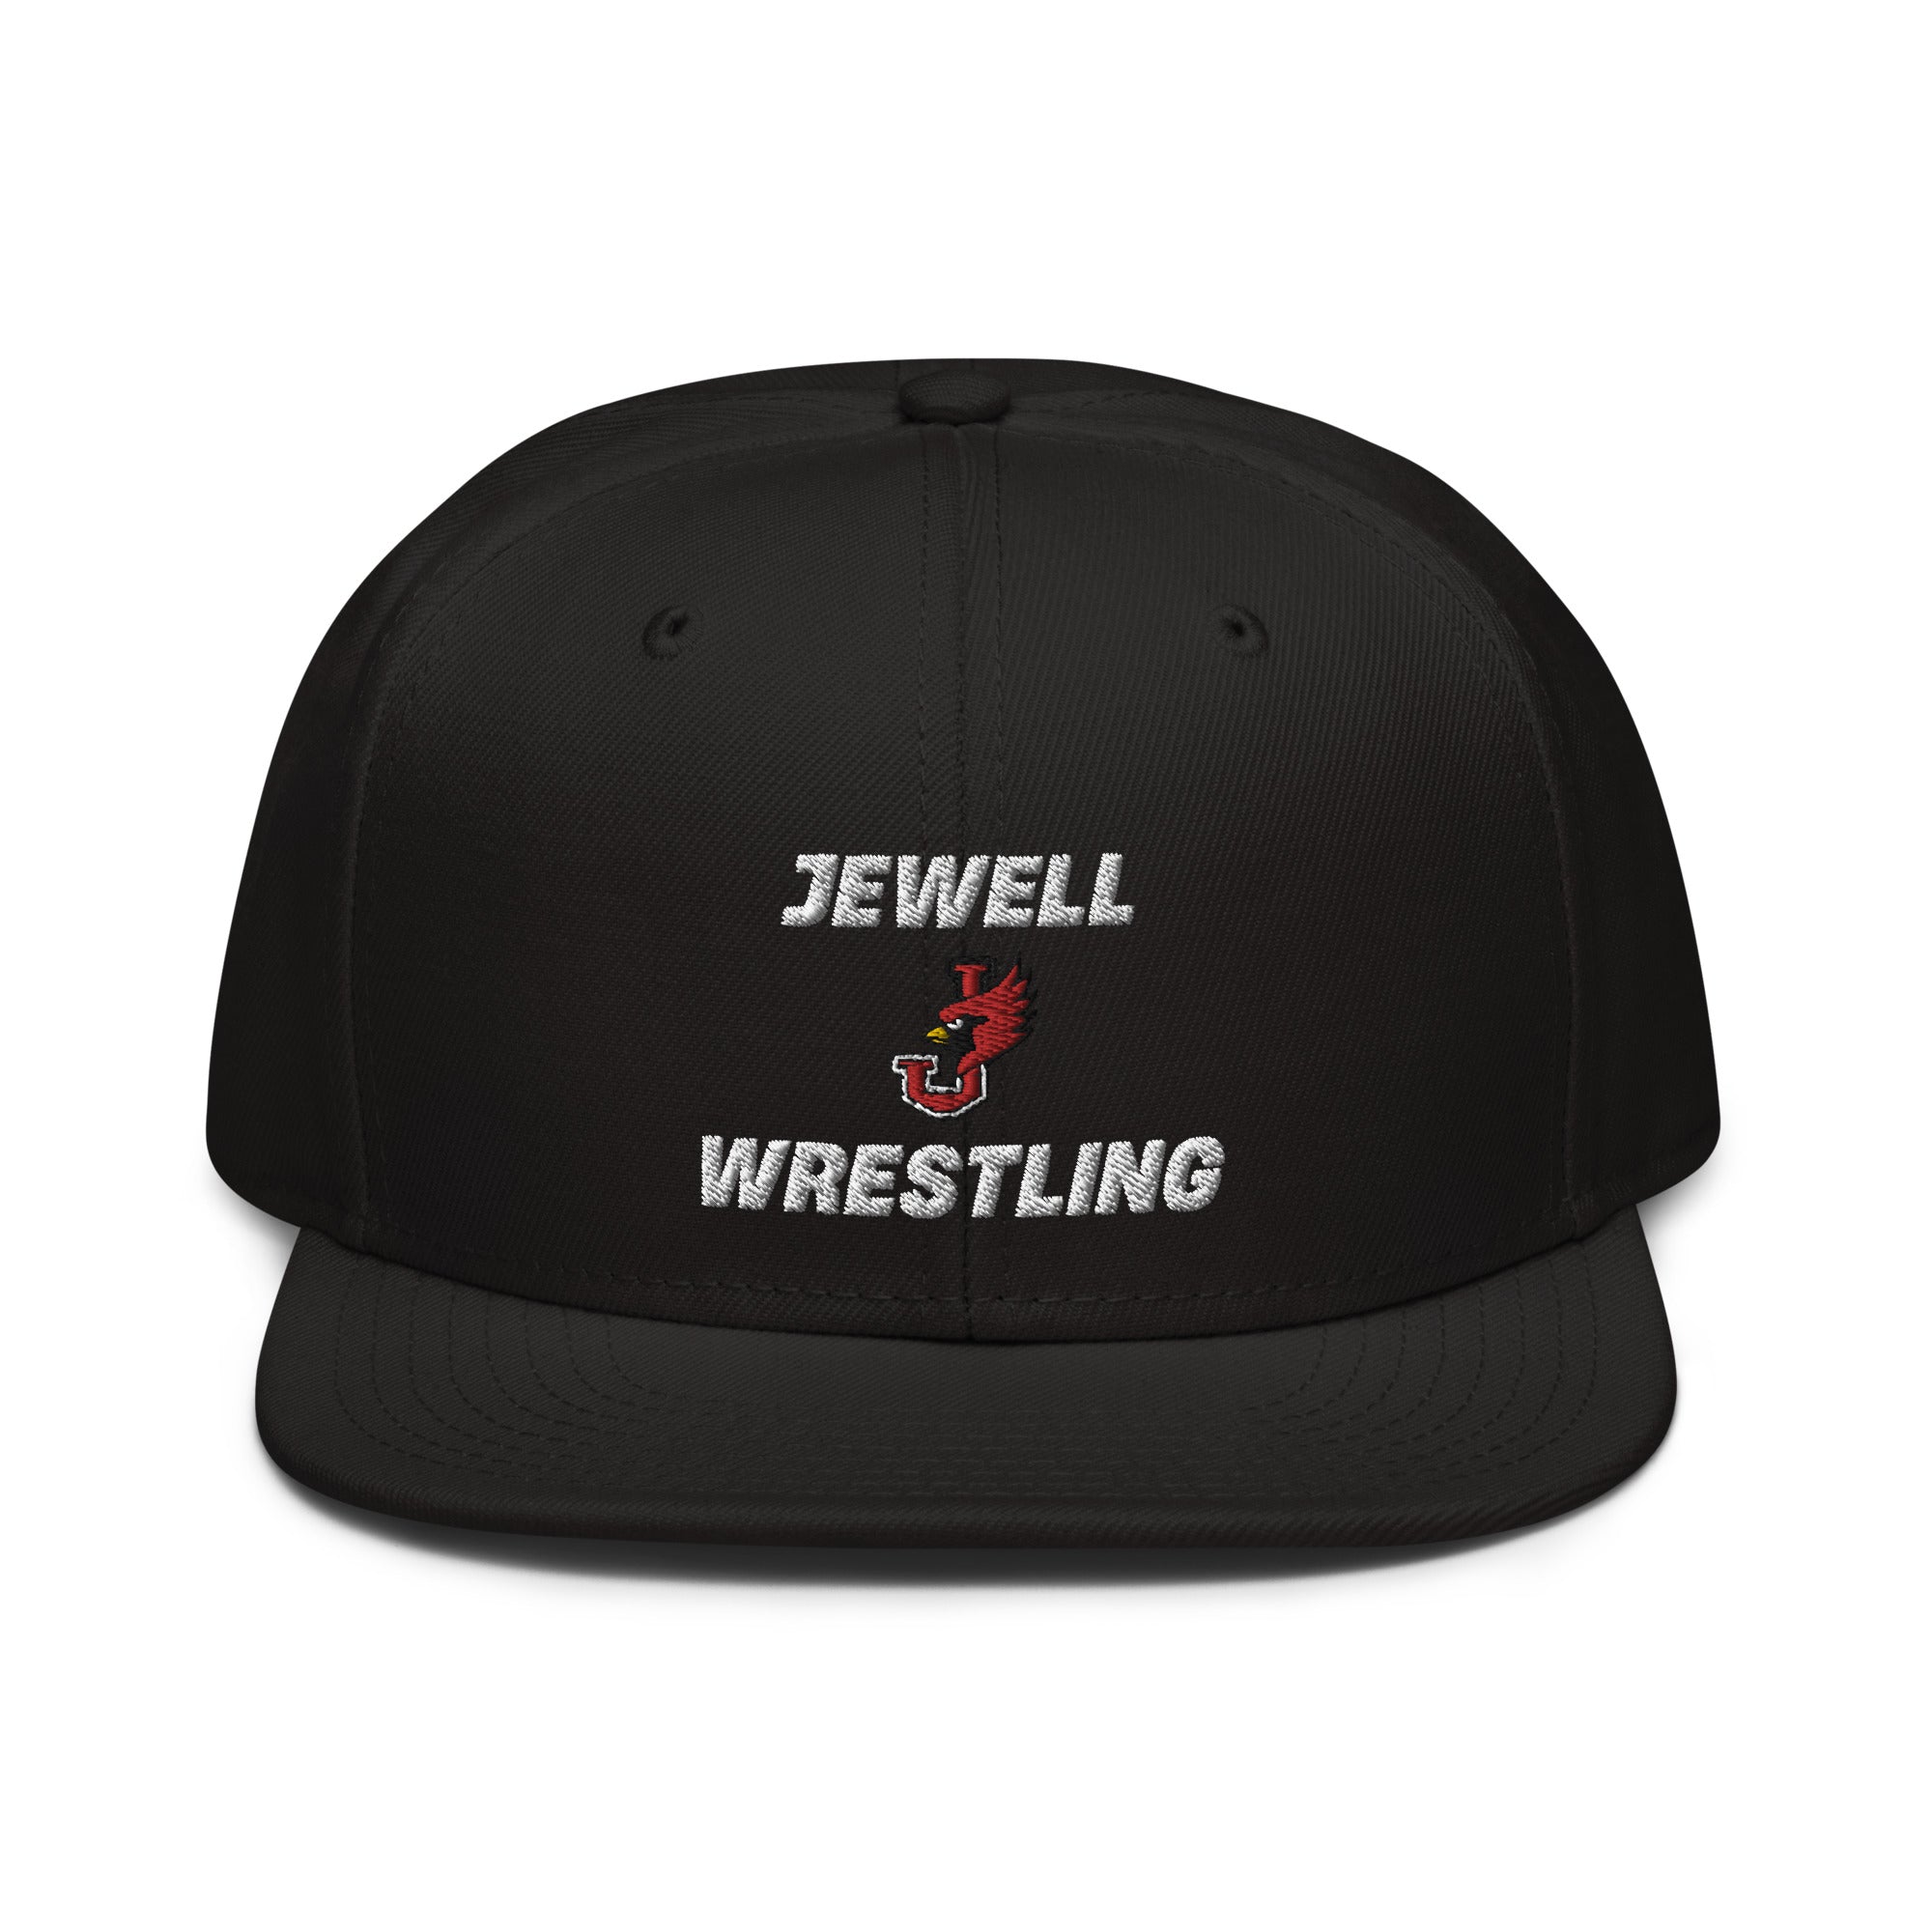 William Jewell Wrestling Snapback